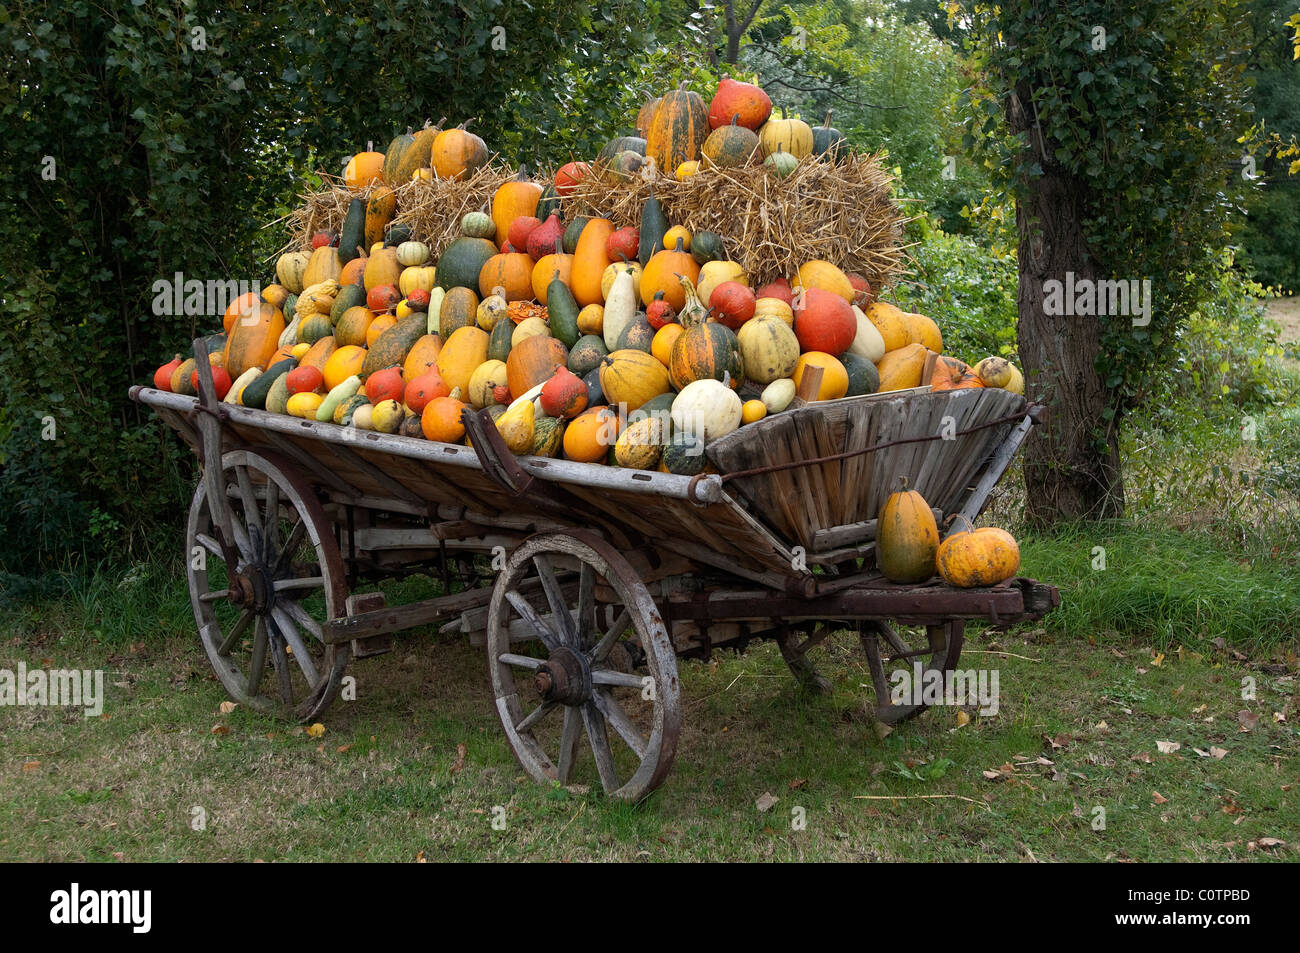 Pumpkins (Cucurbita sp.) of different varieties on a farm cart at the roadside. Burgenland, Austria. Stock Photo